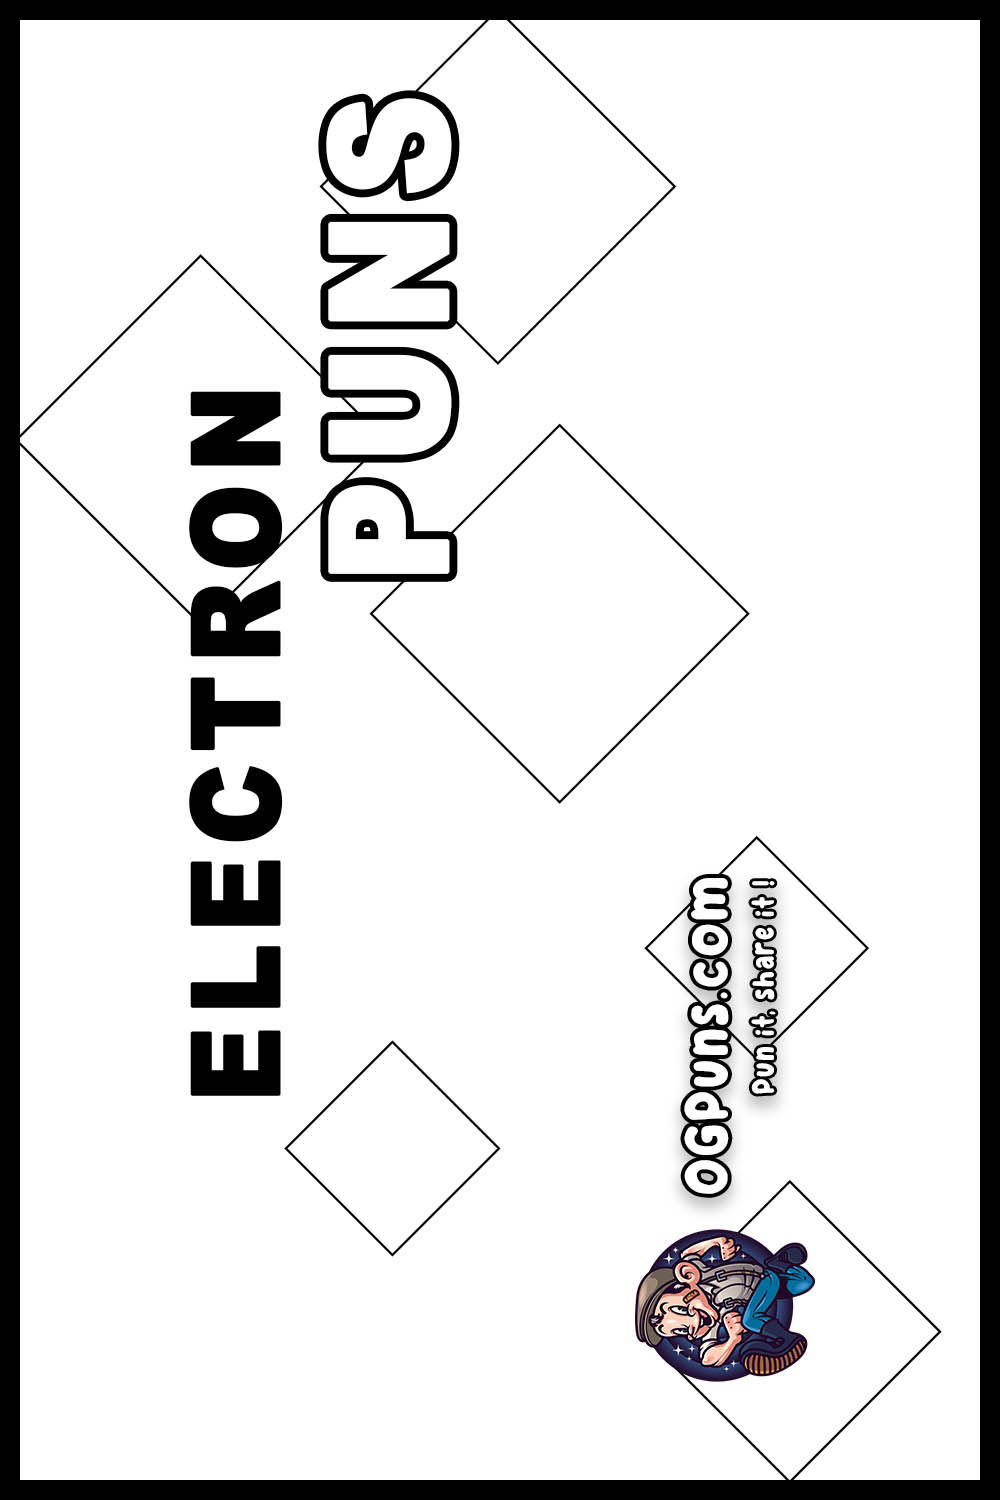 Electron puns Pinterest Image